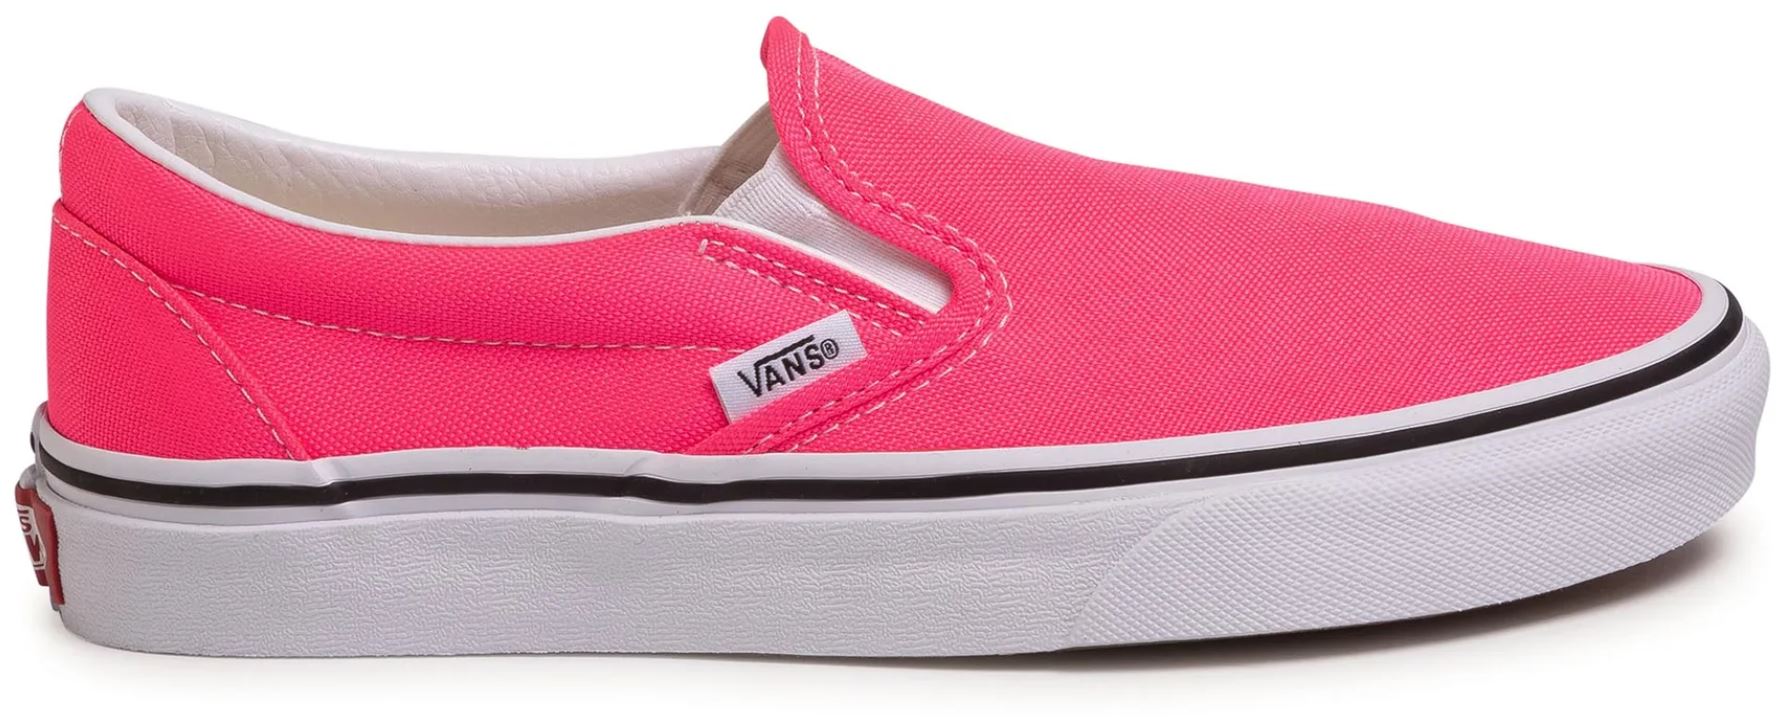 Dámské boty VANS Wmns Slip-On Neon Classic Pink|43